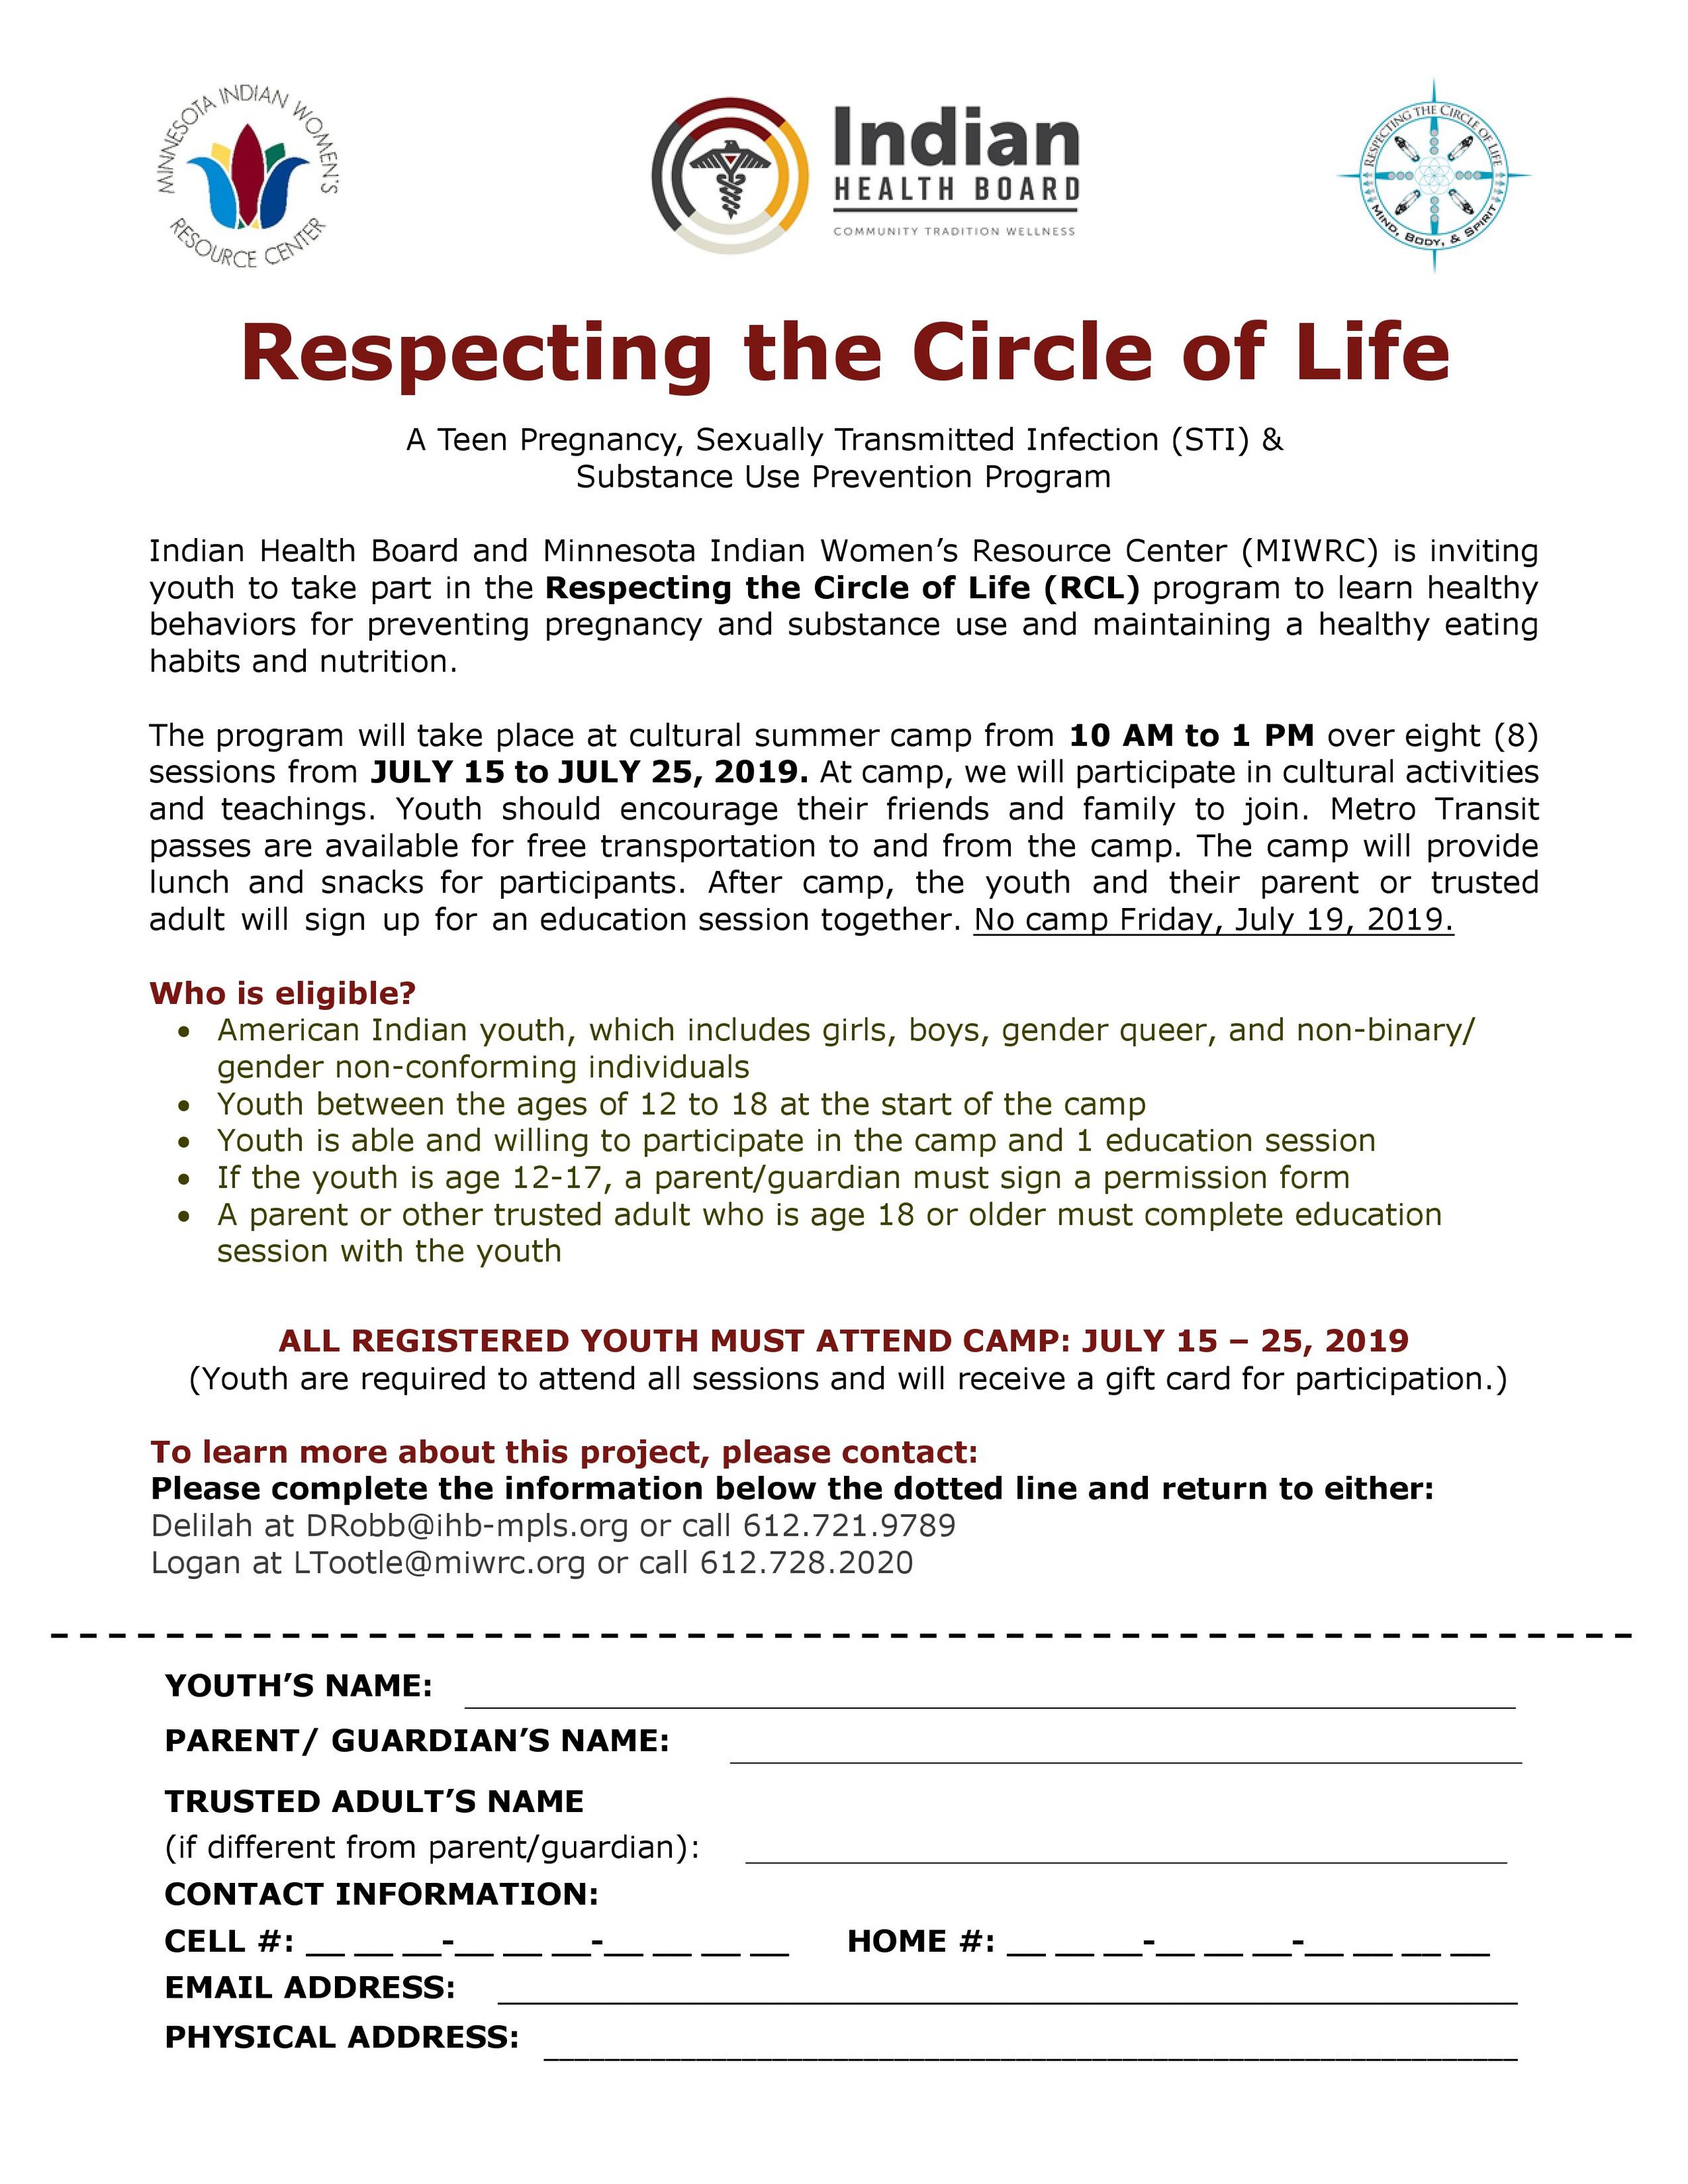 Respecting the Circle of Life Cultural Summer Camp — MIWRC